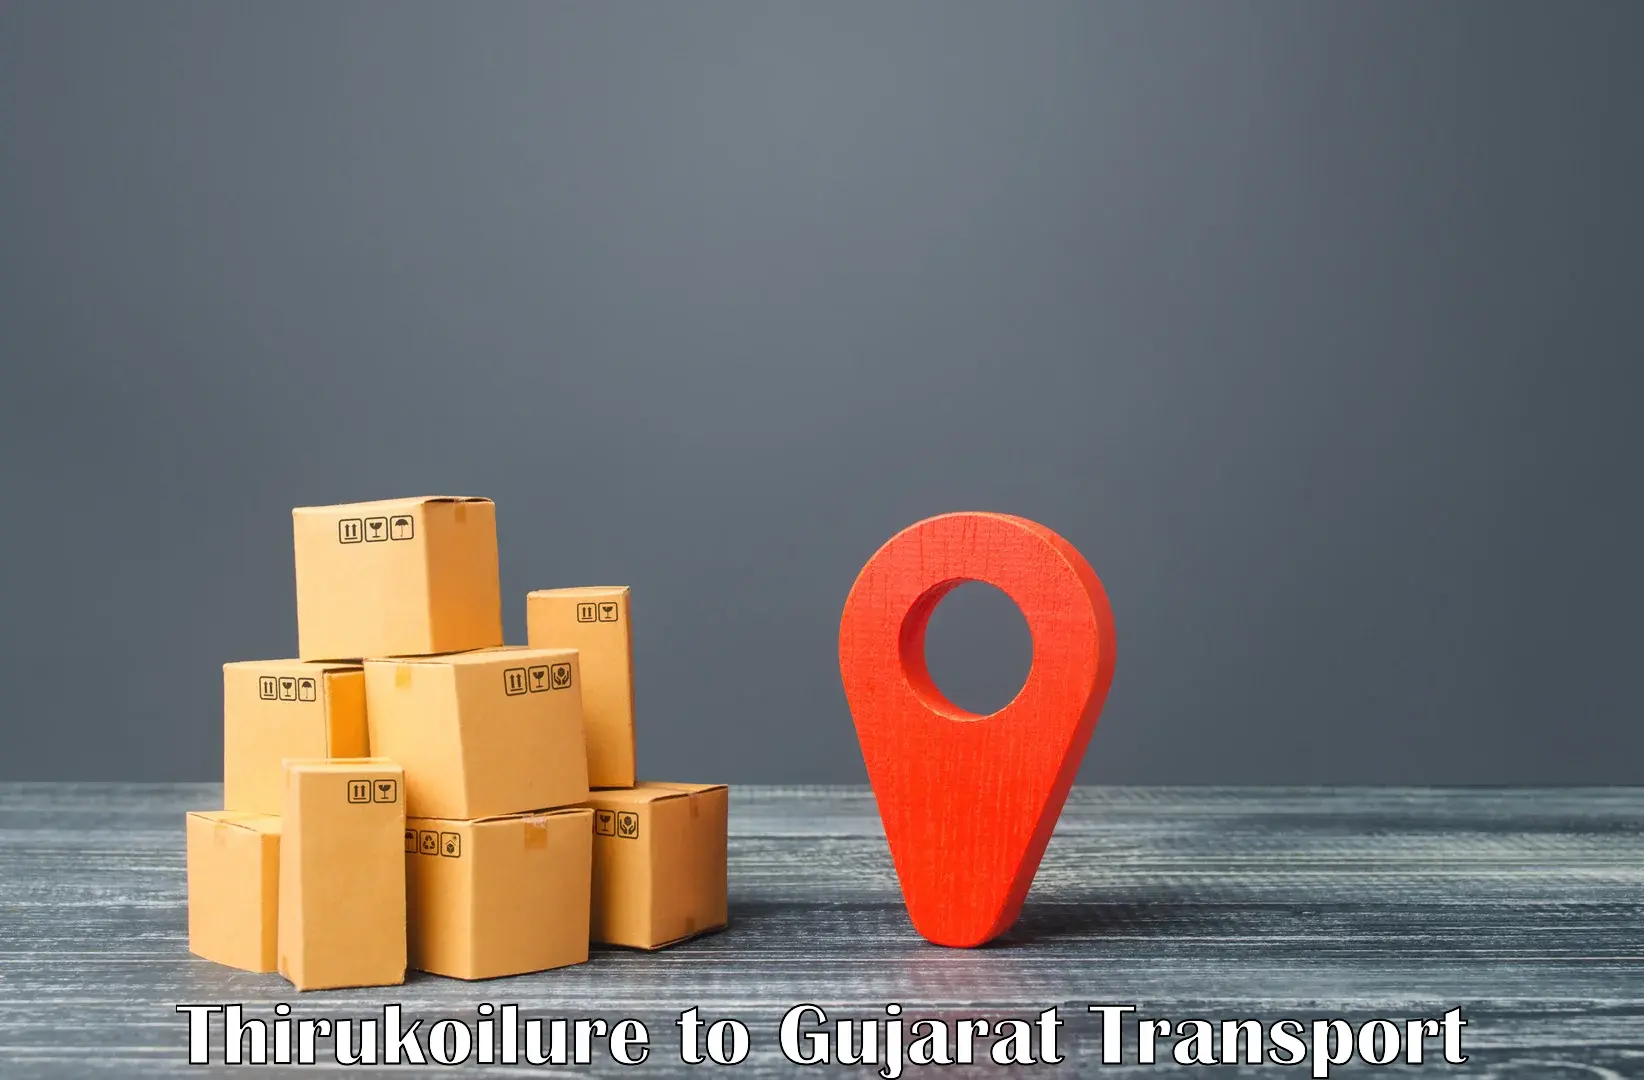 Furniture transport service Thirukoilure to Himmatnagar